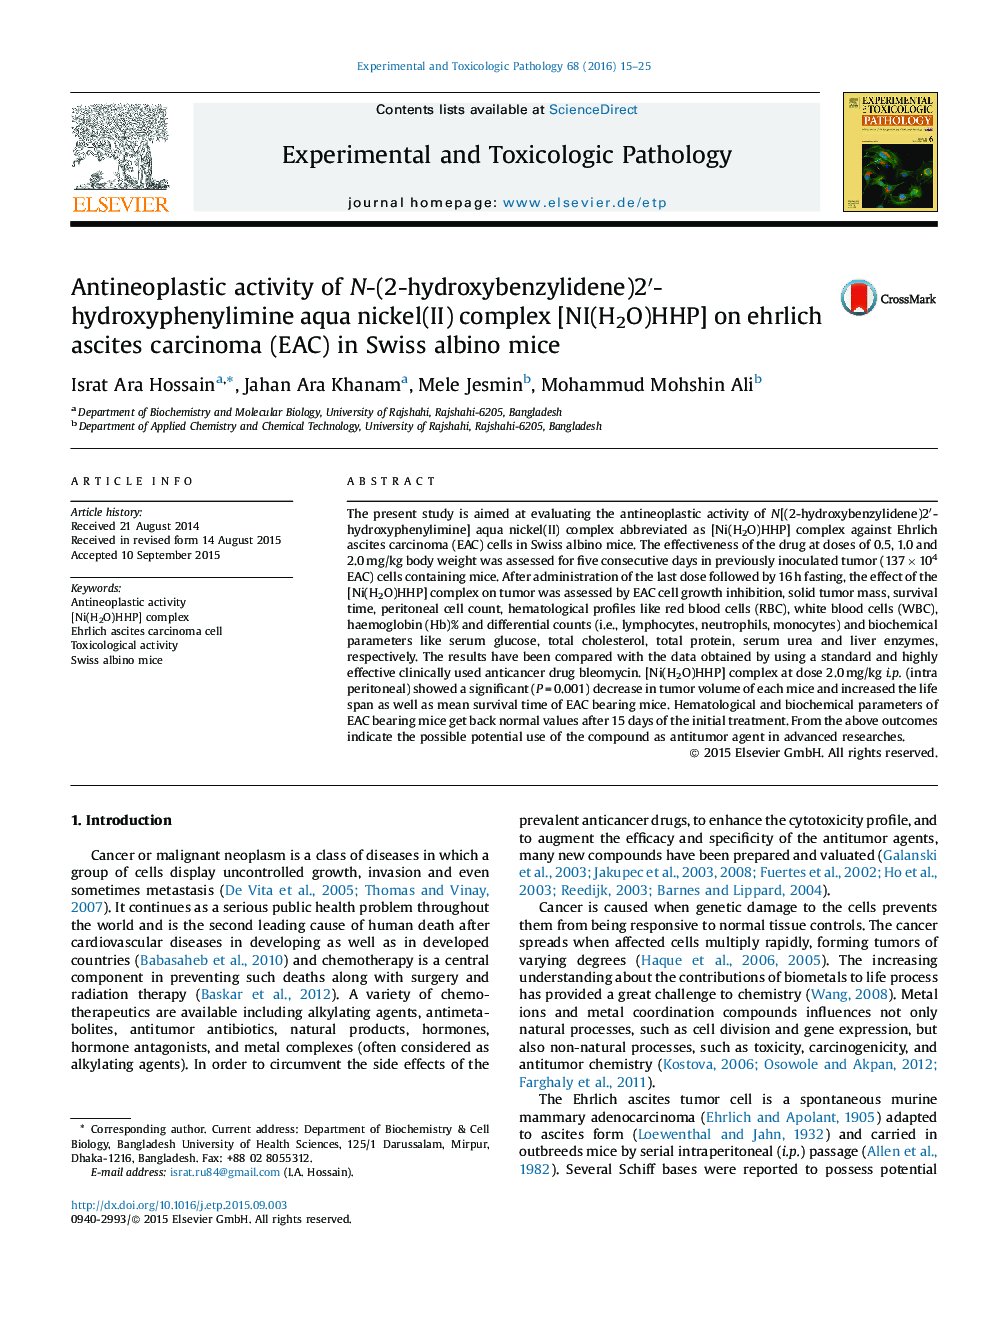 Antineoplastic activity of N-(2-hydroxybenzylidene)2â²-hydroxyphenylimine aqua nickel(II) complex [NI(H2O)HHP] on ehrlich ascites carcinoma (EAC) in Swiss albino mice